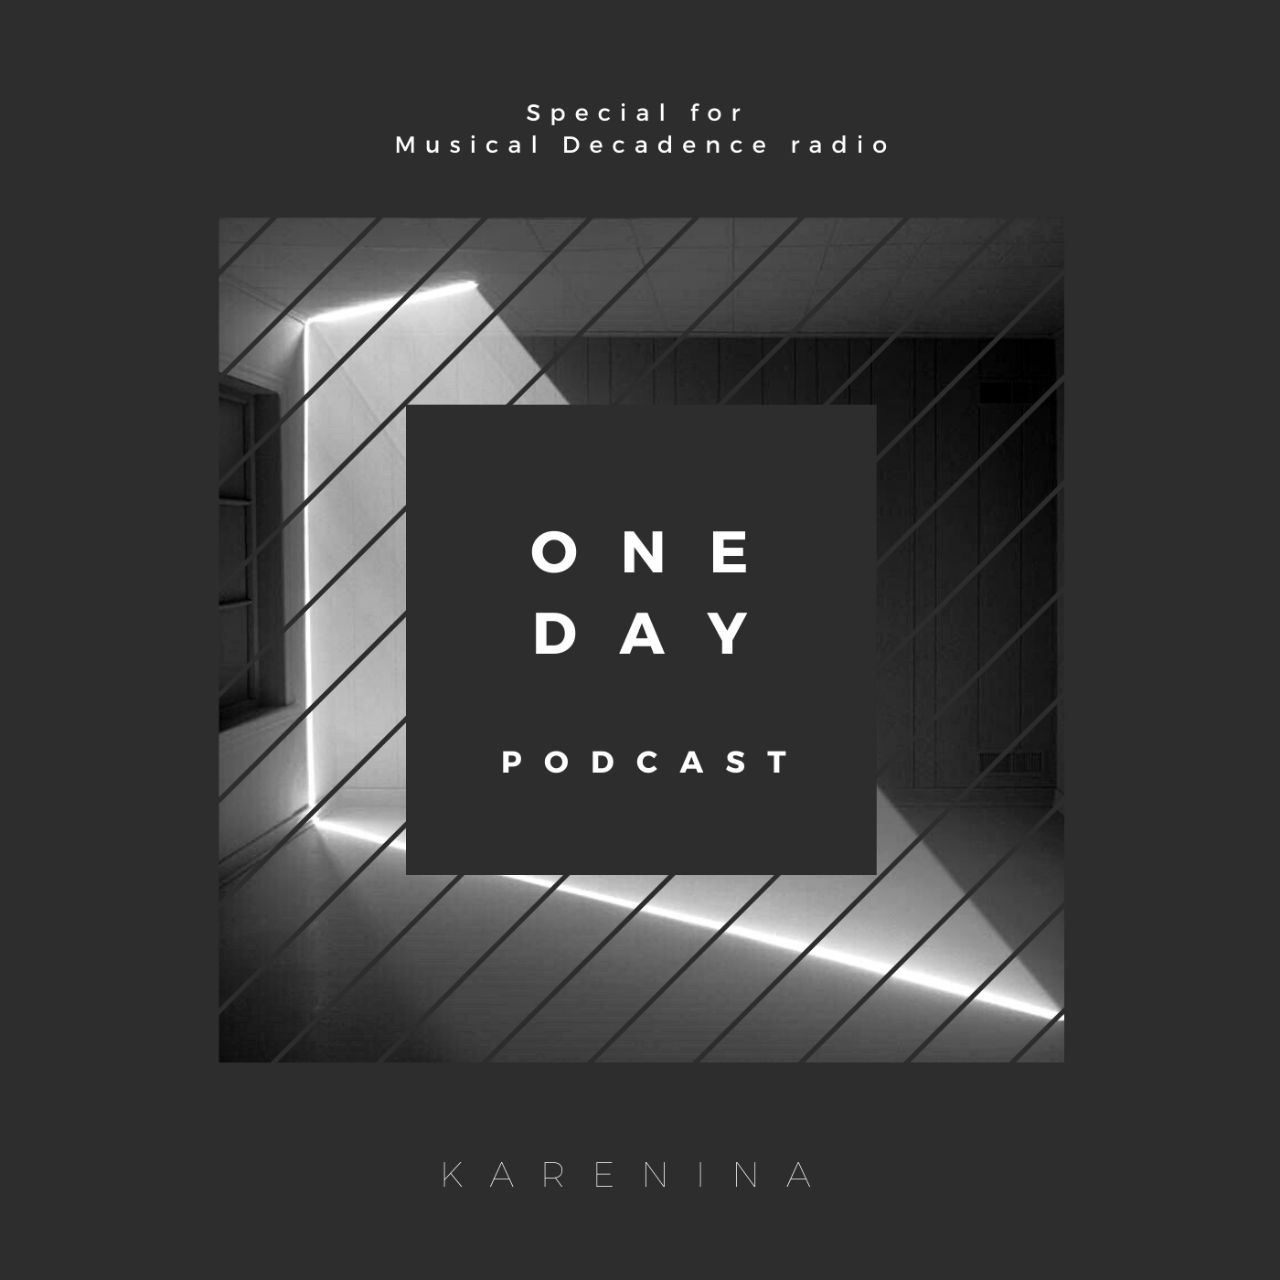 One Day Podcast by KARENINA